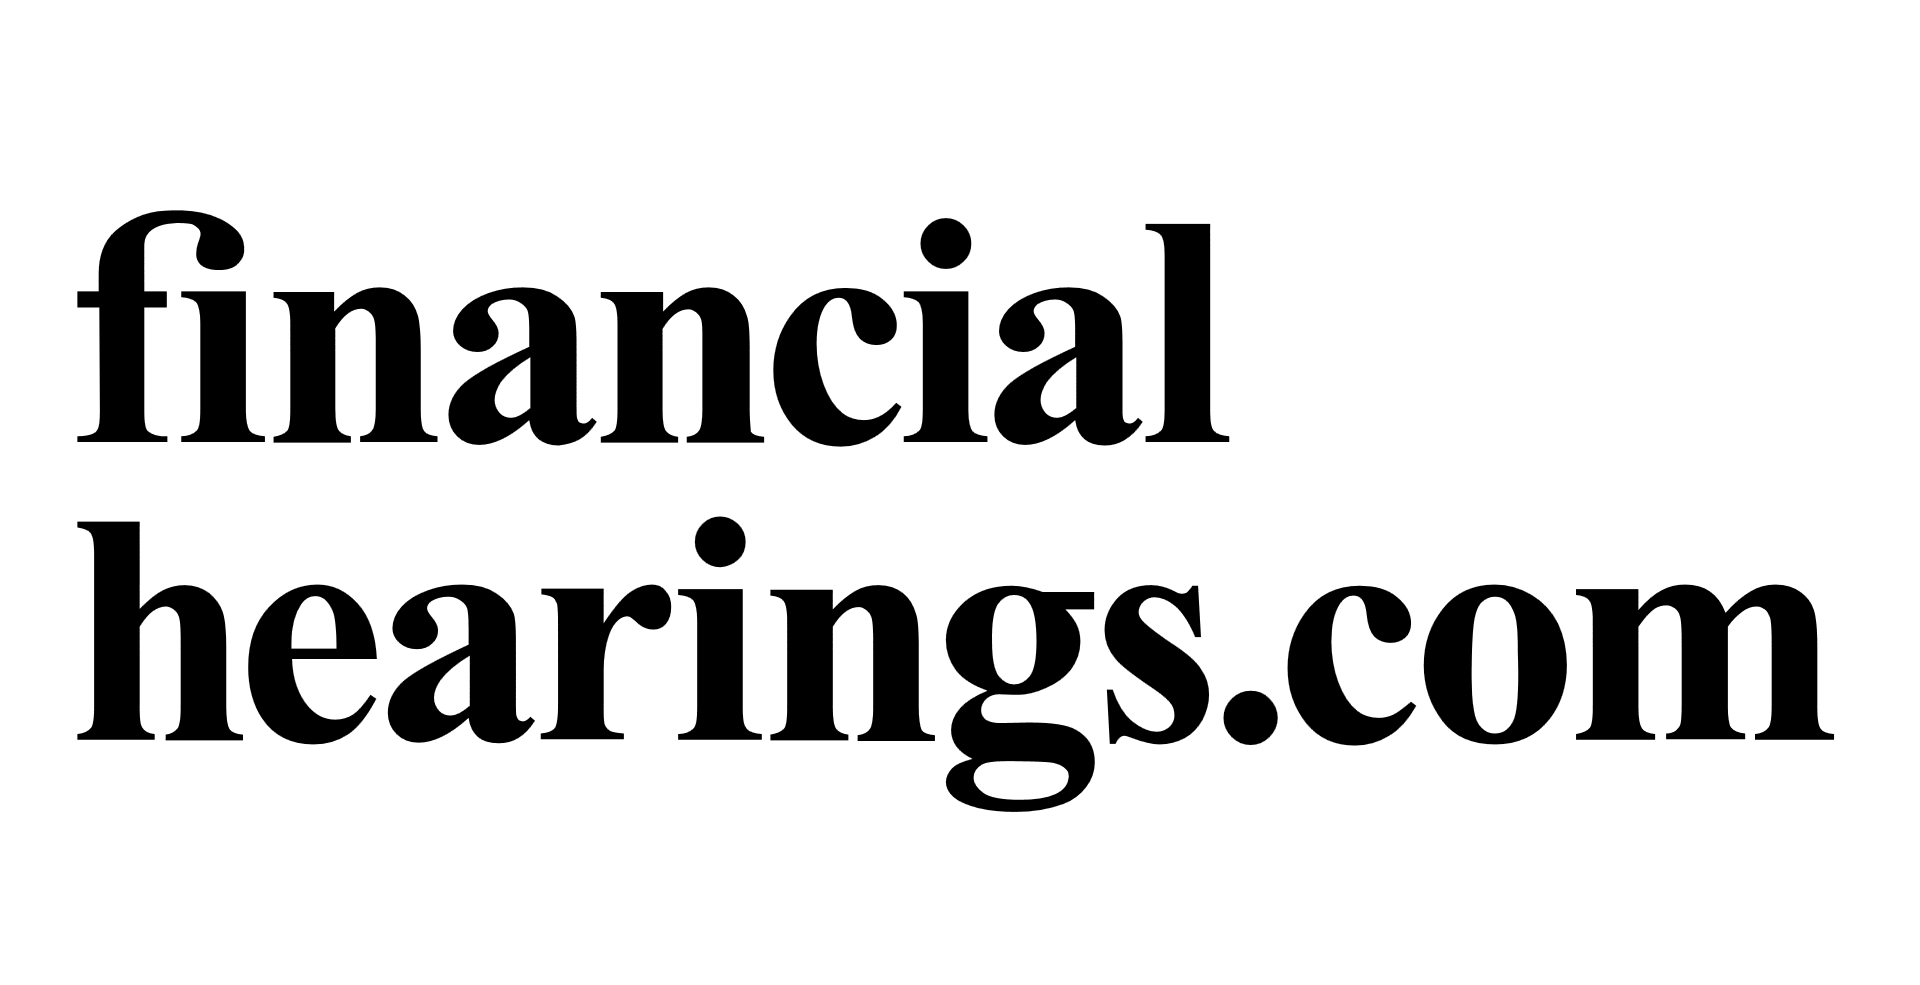 Fh Logo